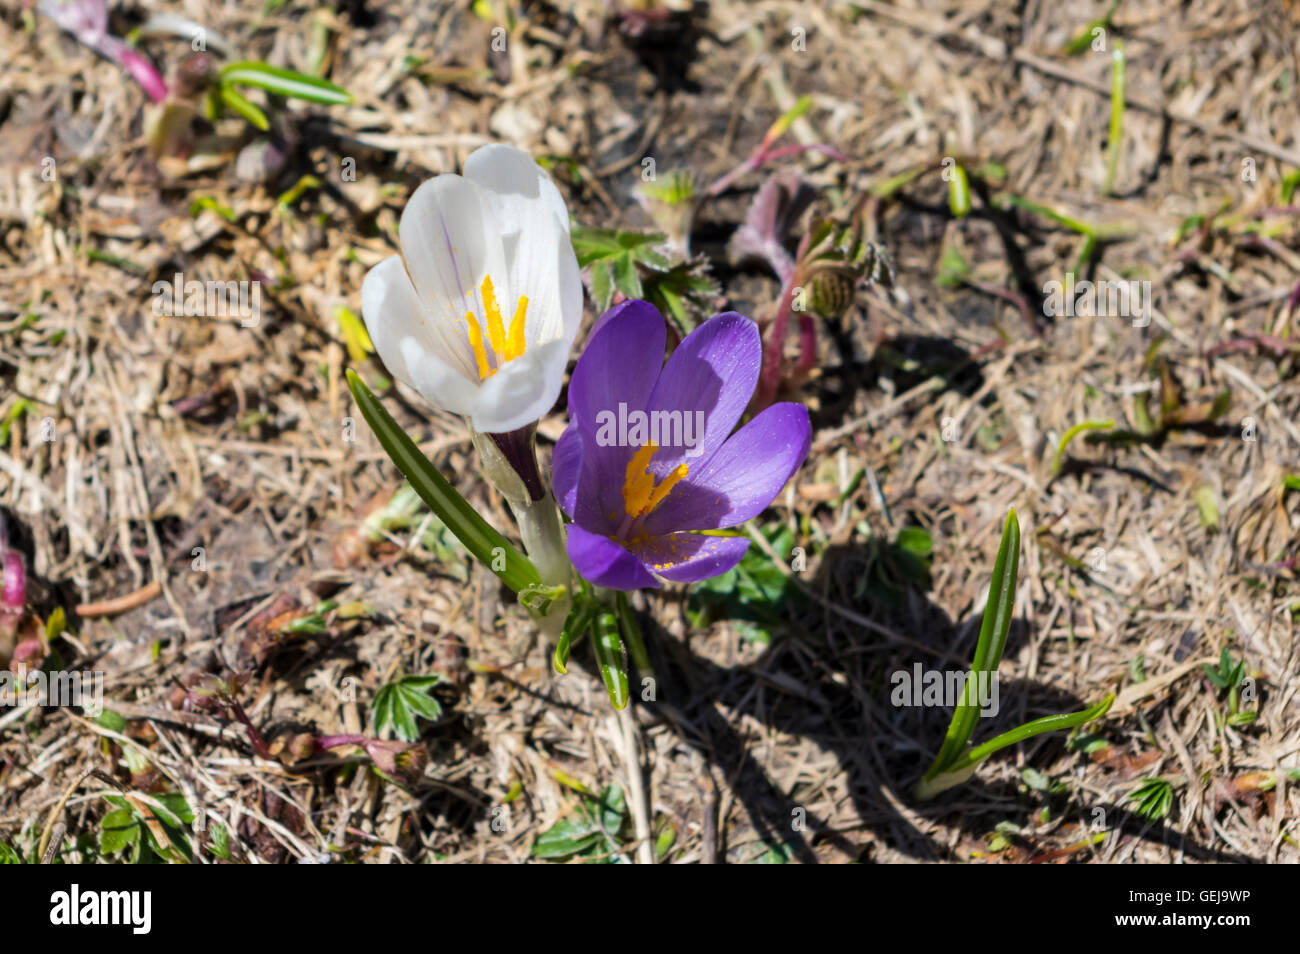 Two alpine spring crocus (crocus vernus albiflorus) flowers in white and violet. Stock Photo